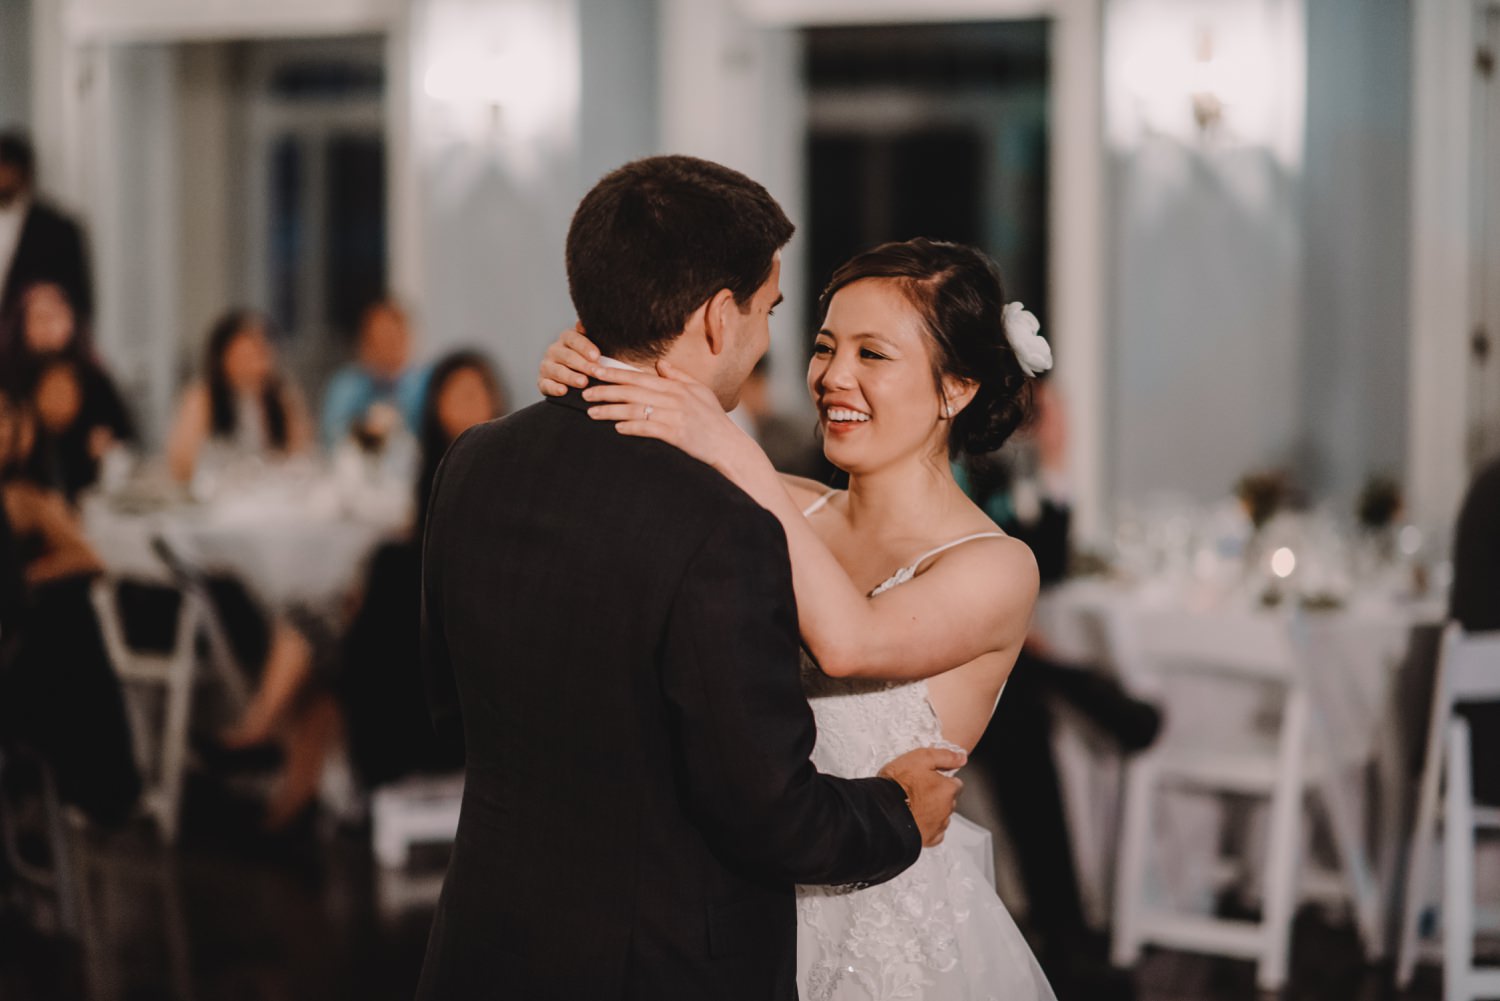 bride and groom first dance, The Women's Club of Evanston Wedding Photographer - The Adamkovi, Chicago wedding Photographer